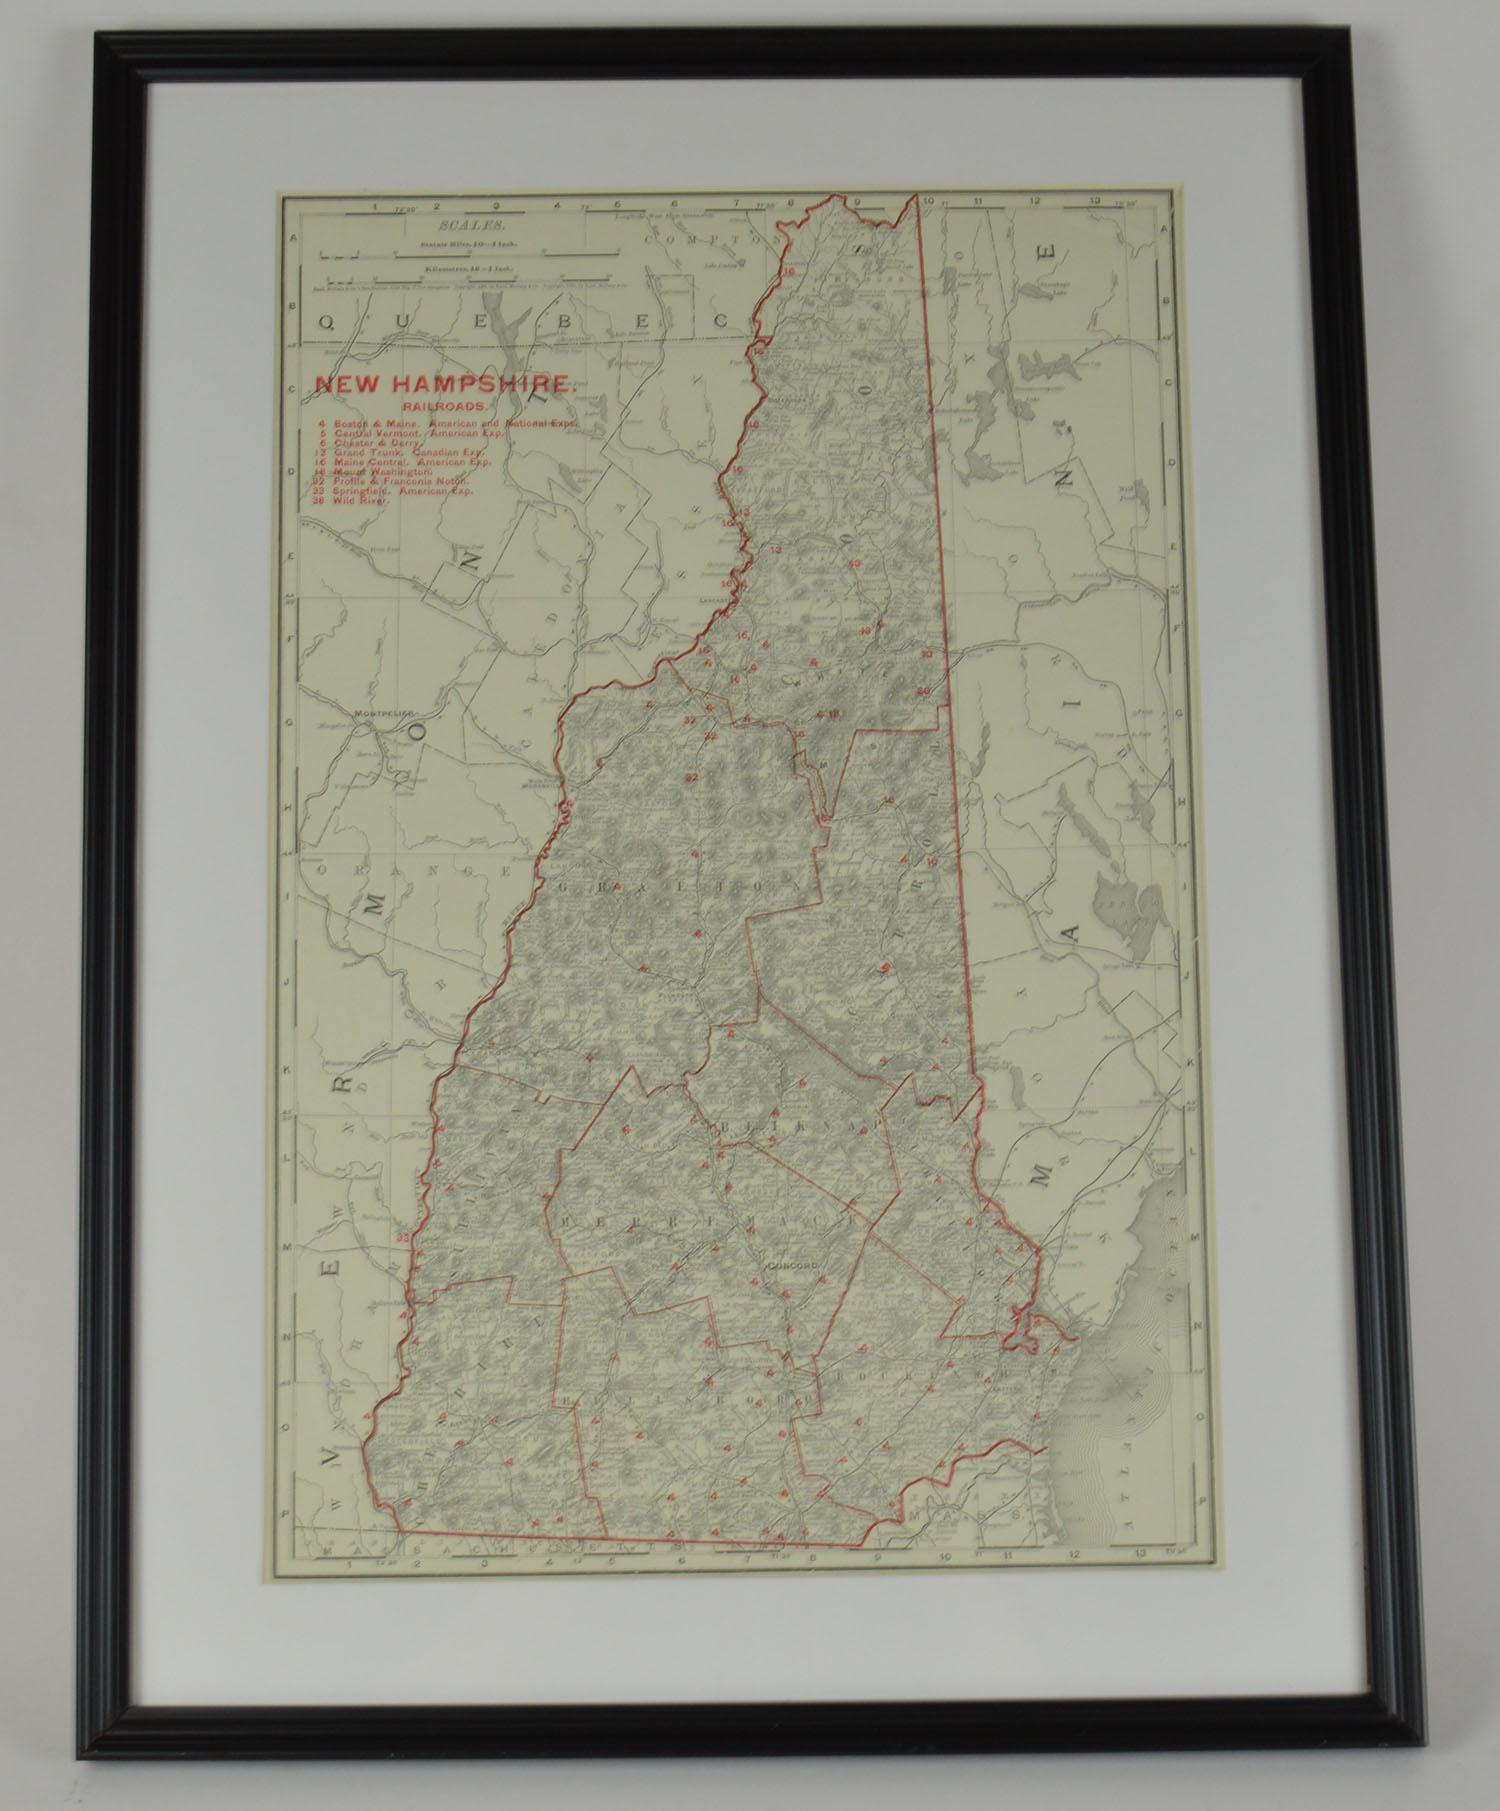 Set of 6 Original Vintage Maps of American States, circa 1900 (amerikanisch)